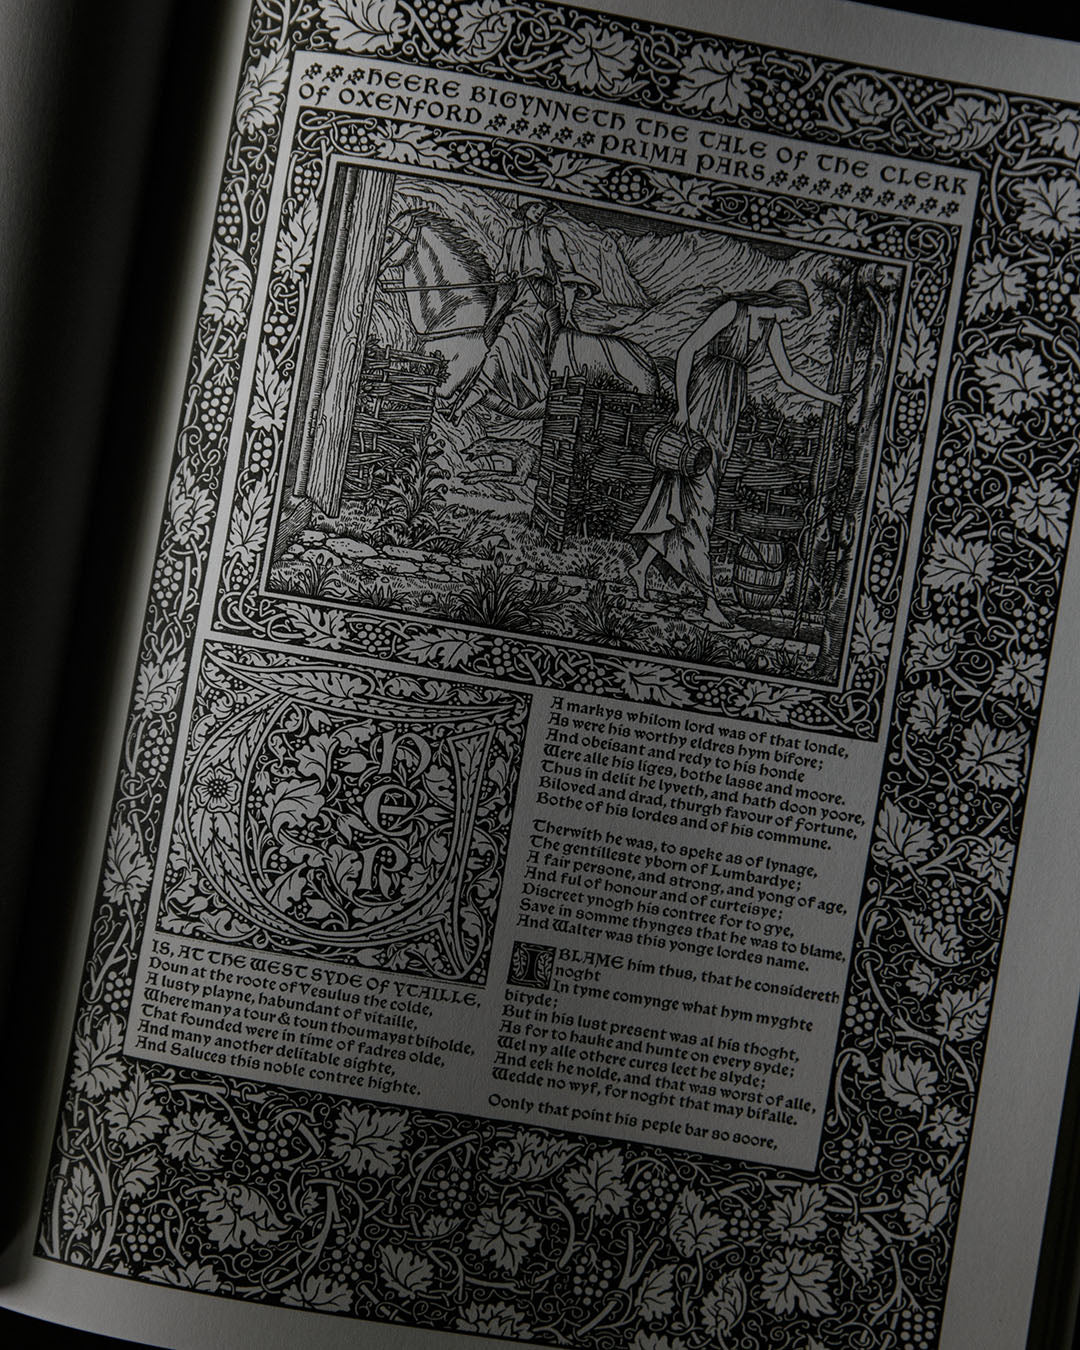 The Kelmscott Chaucer Colouring Book